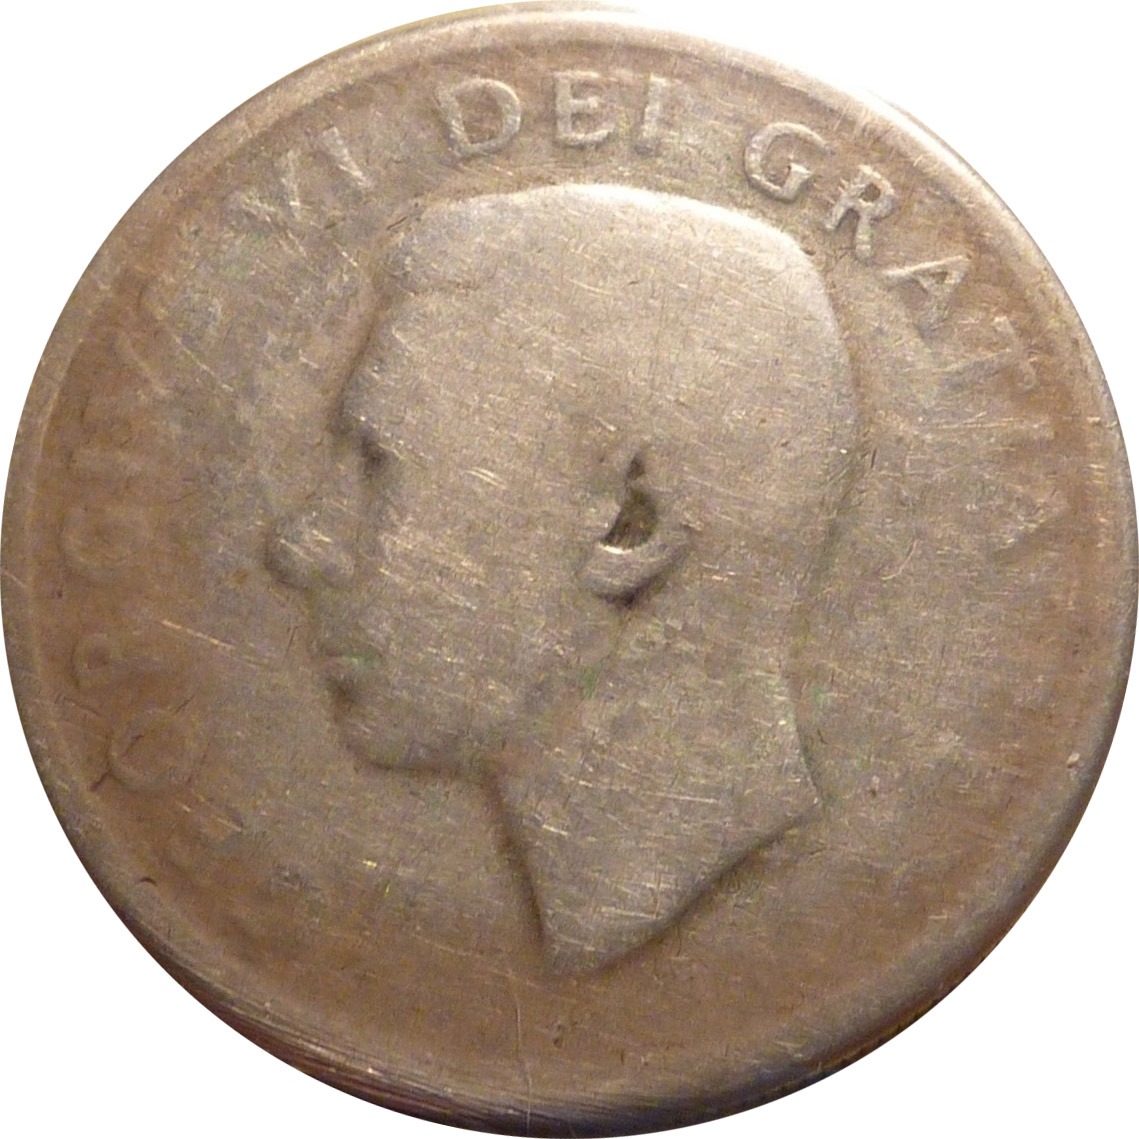 VG-8 - 1 dollar 1937 to 1952 - George VI